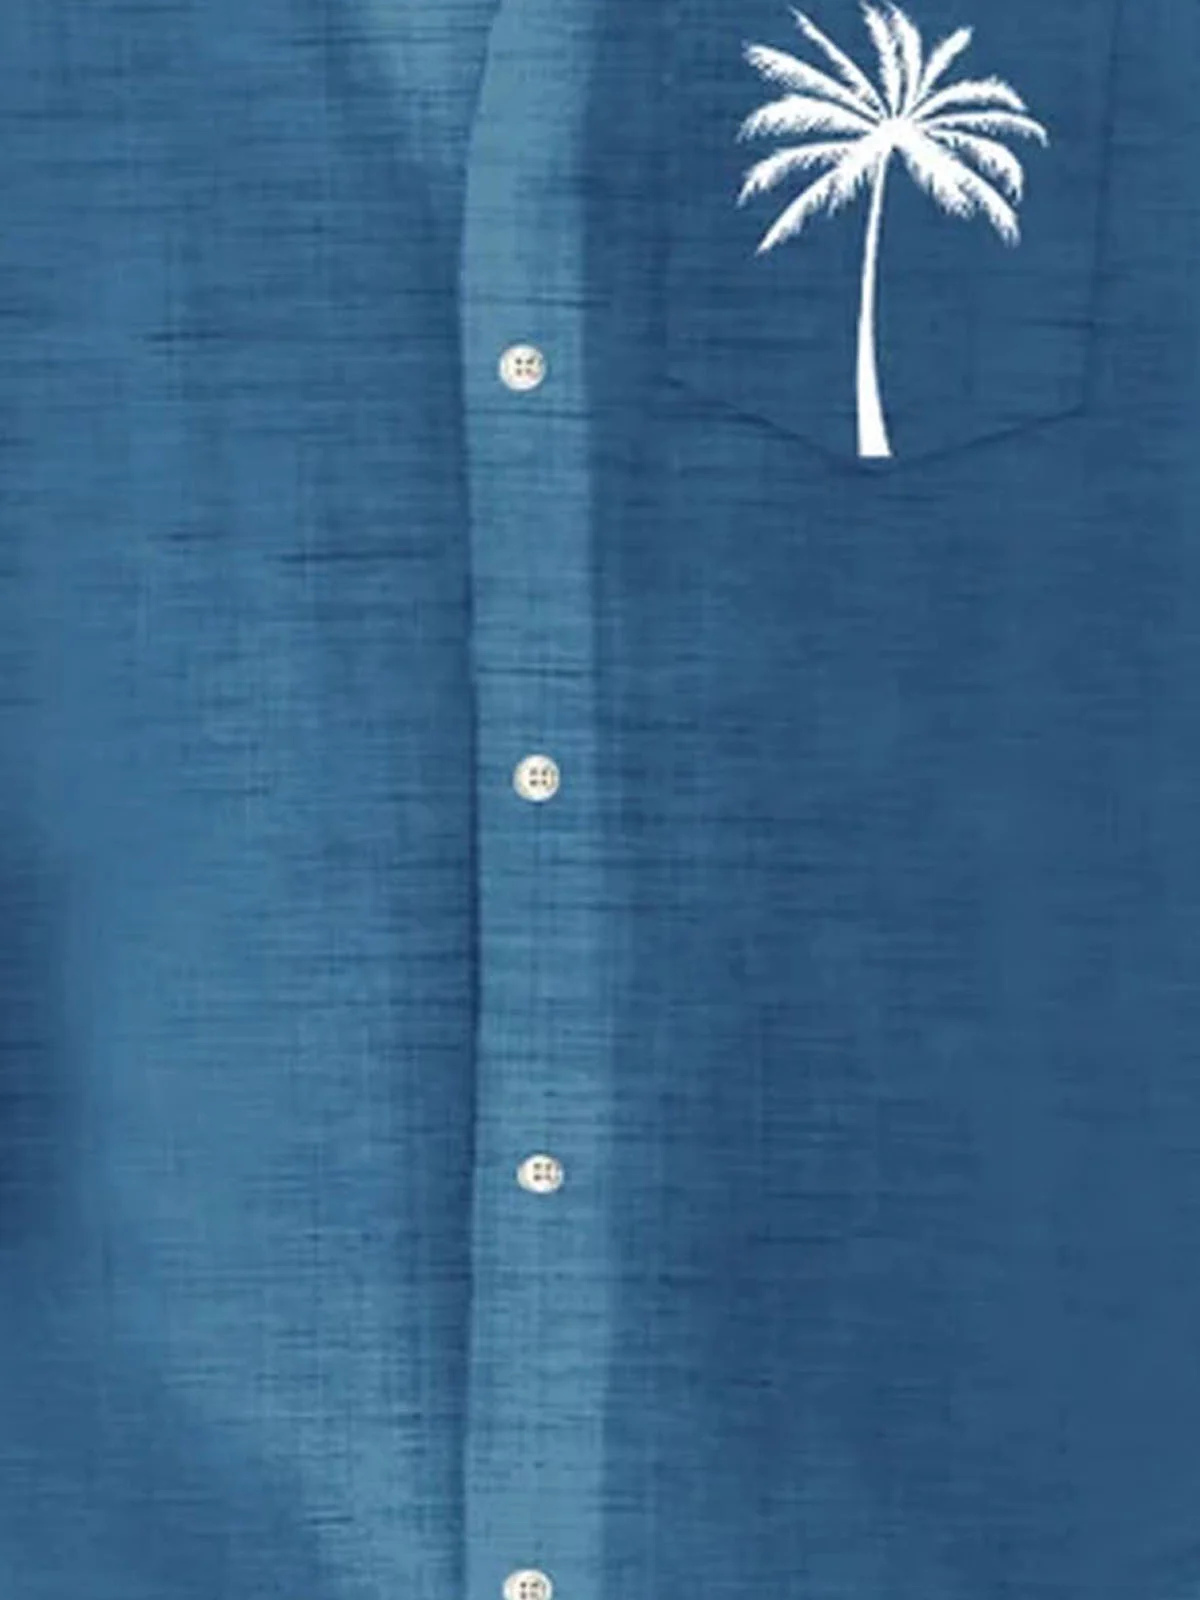 Royaura®Hawaiian Coconut Tree Print Men's Button Pocket Short Sleeve Shirt